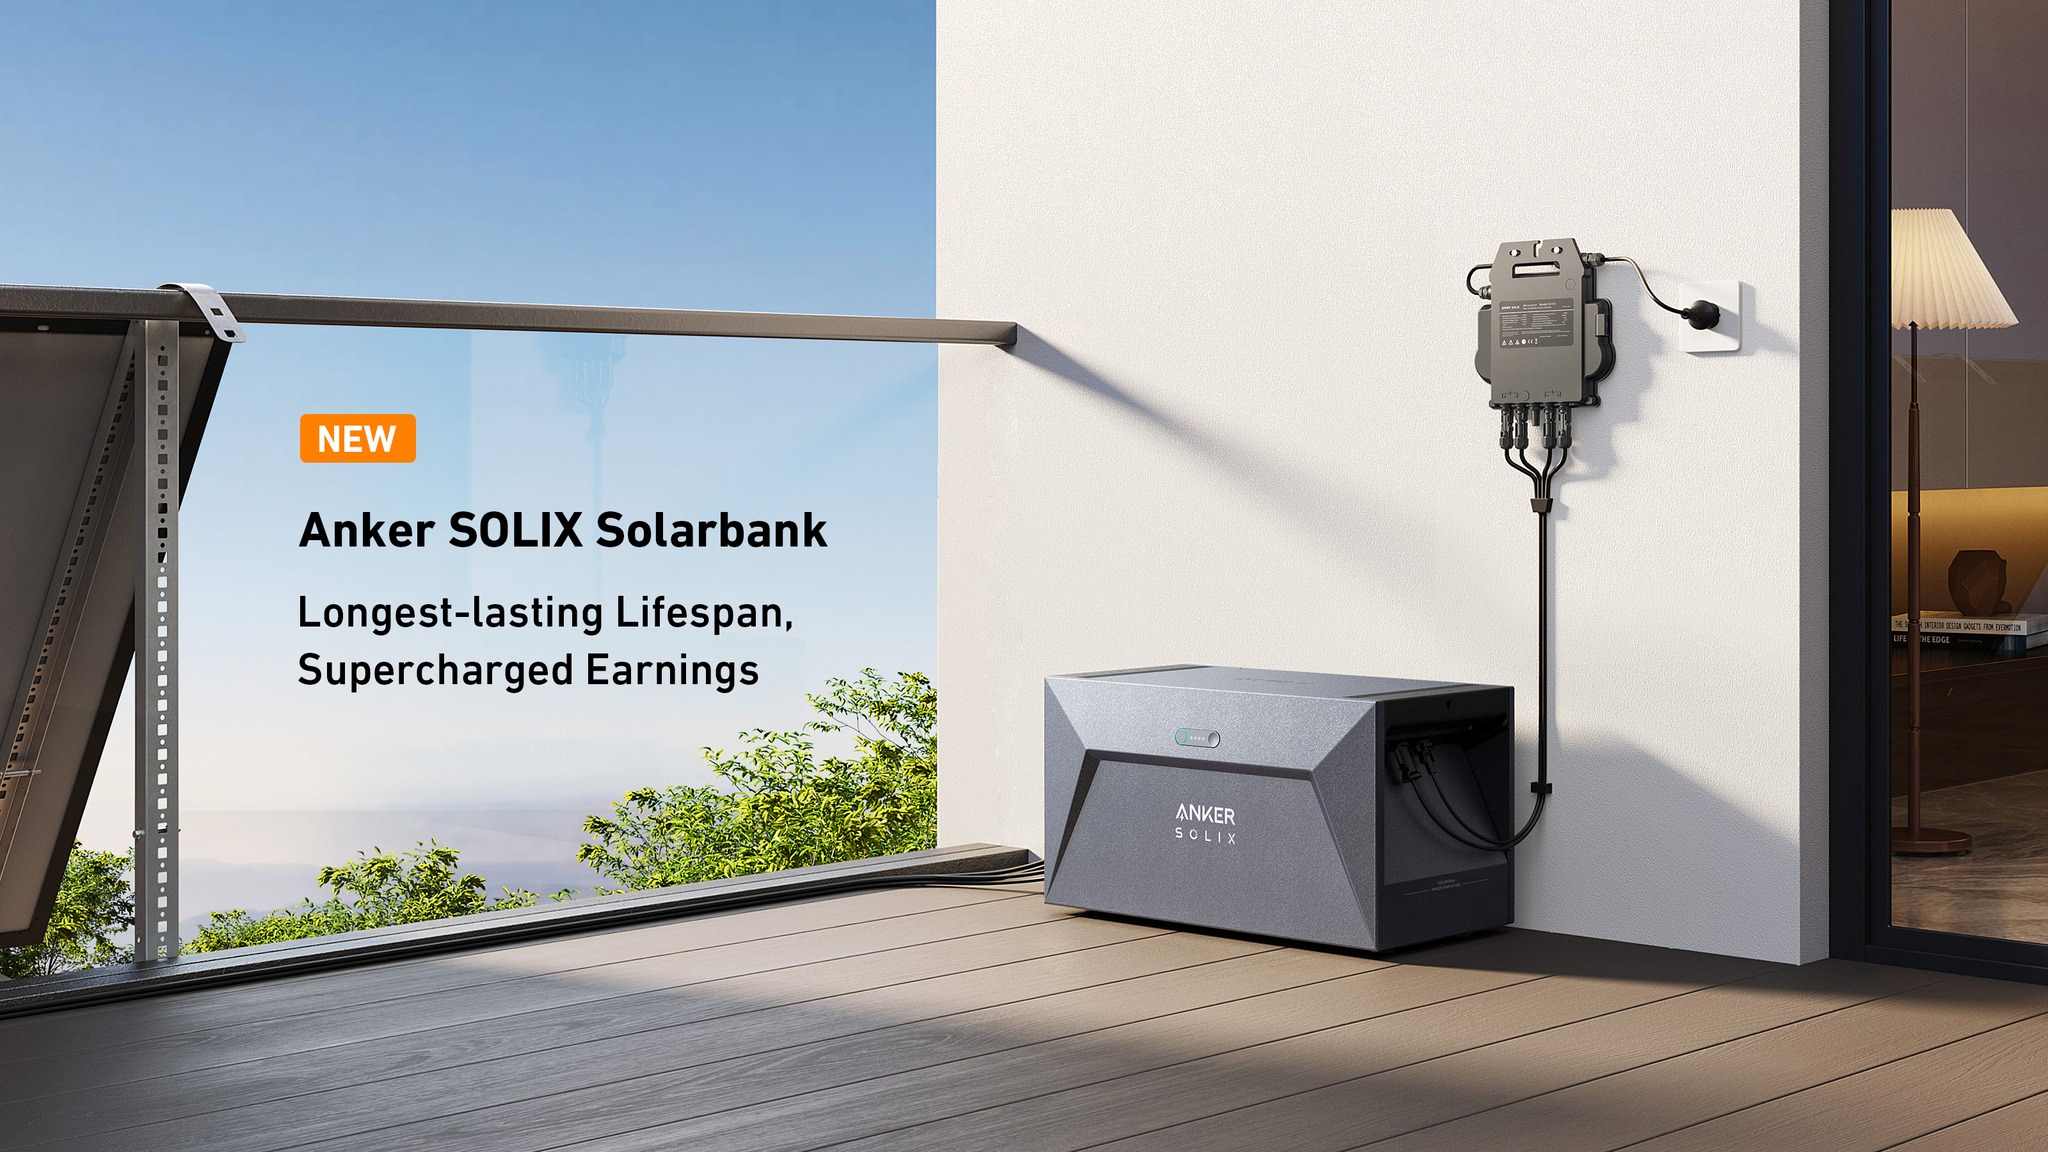 Anker balkonbatterij Solarbank E1600 in Europa magazijn